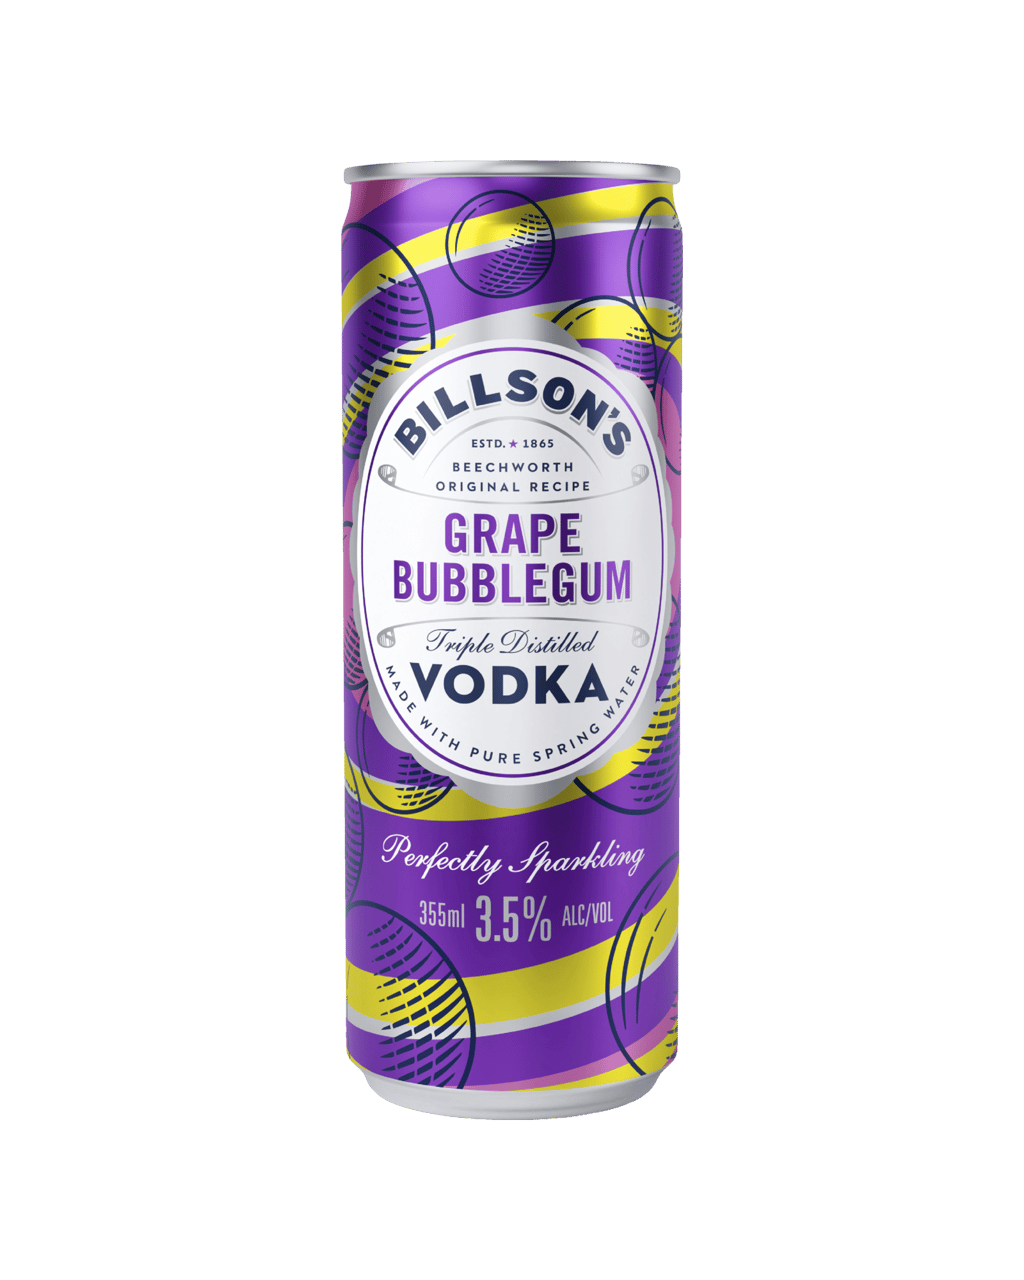 Image - Vodka with Grape Bubblegum by Billson's